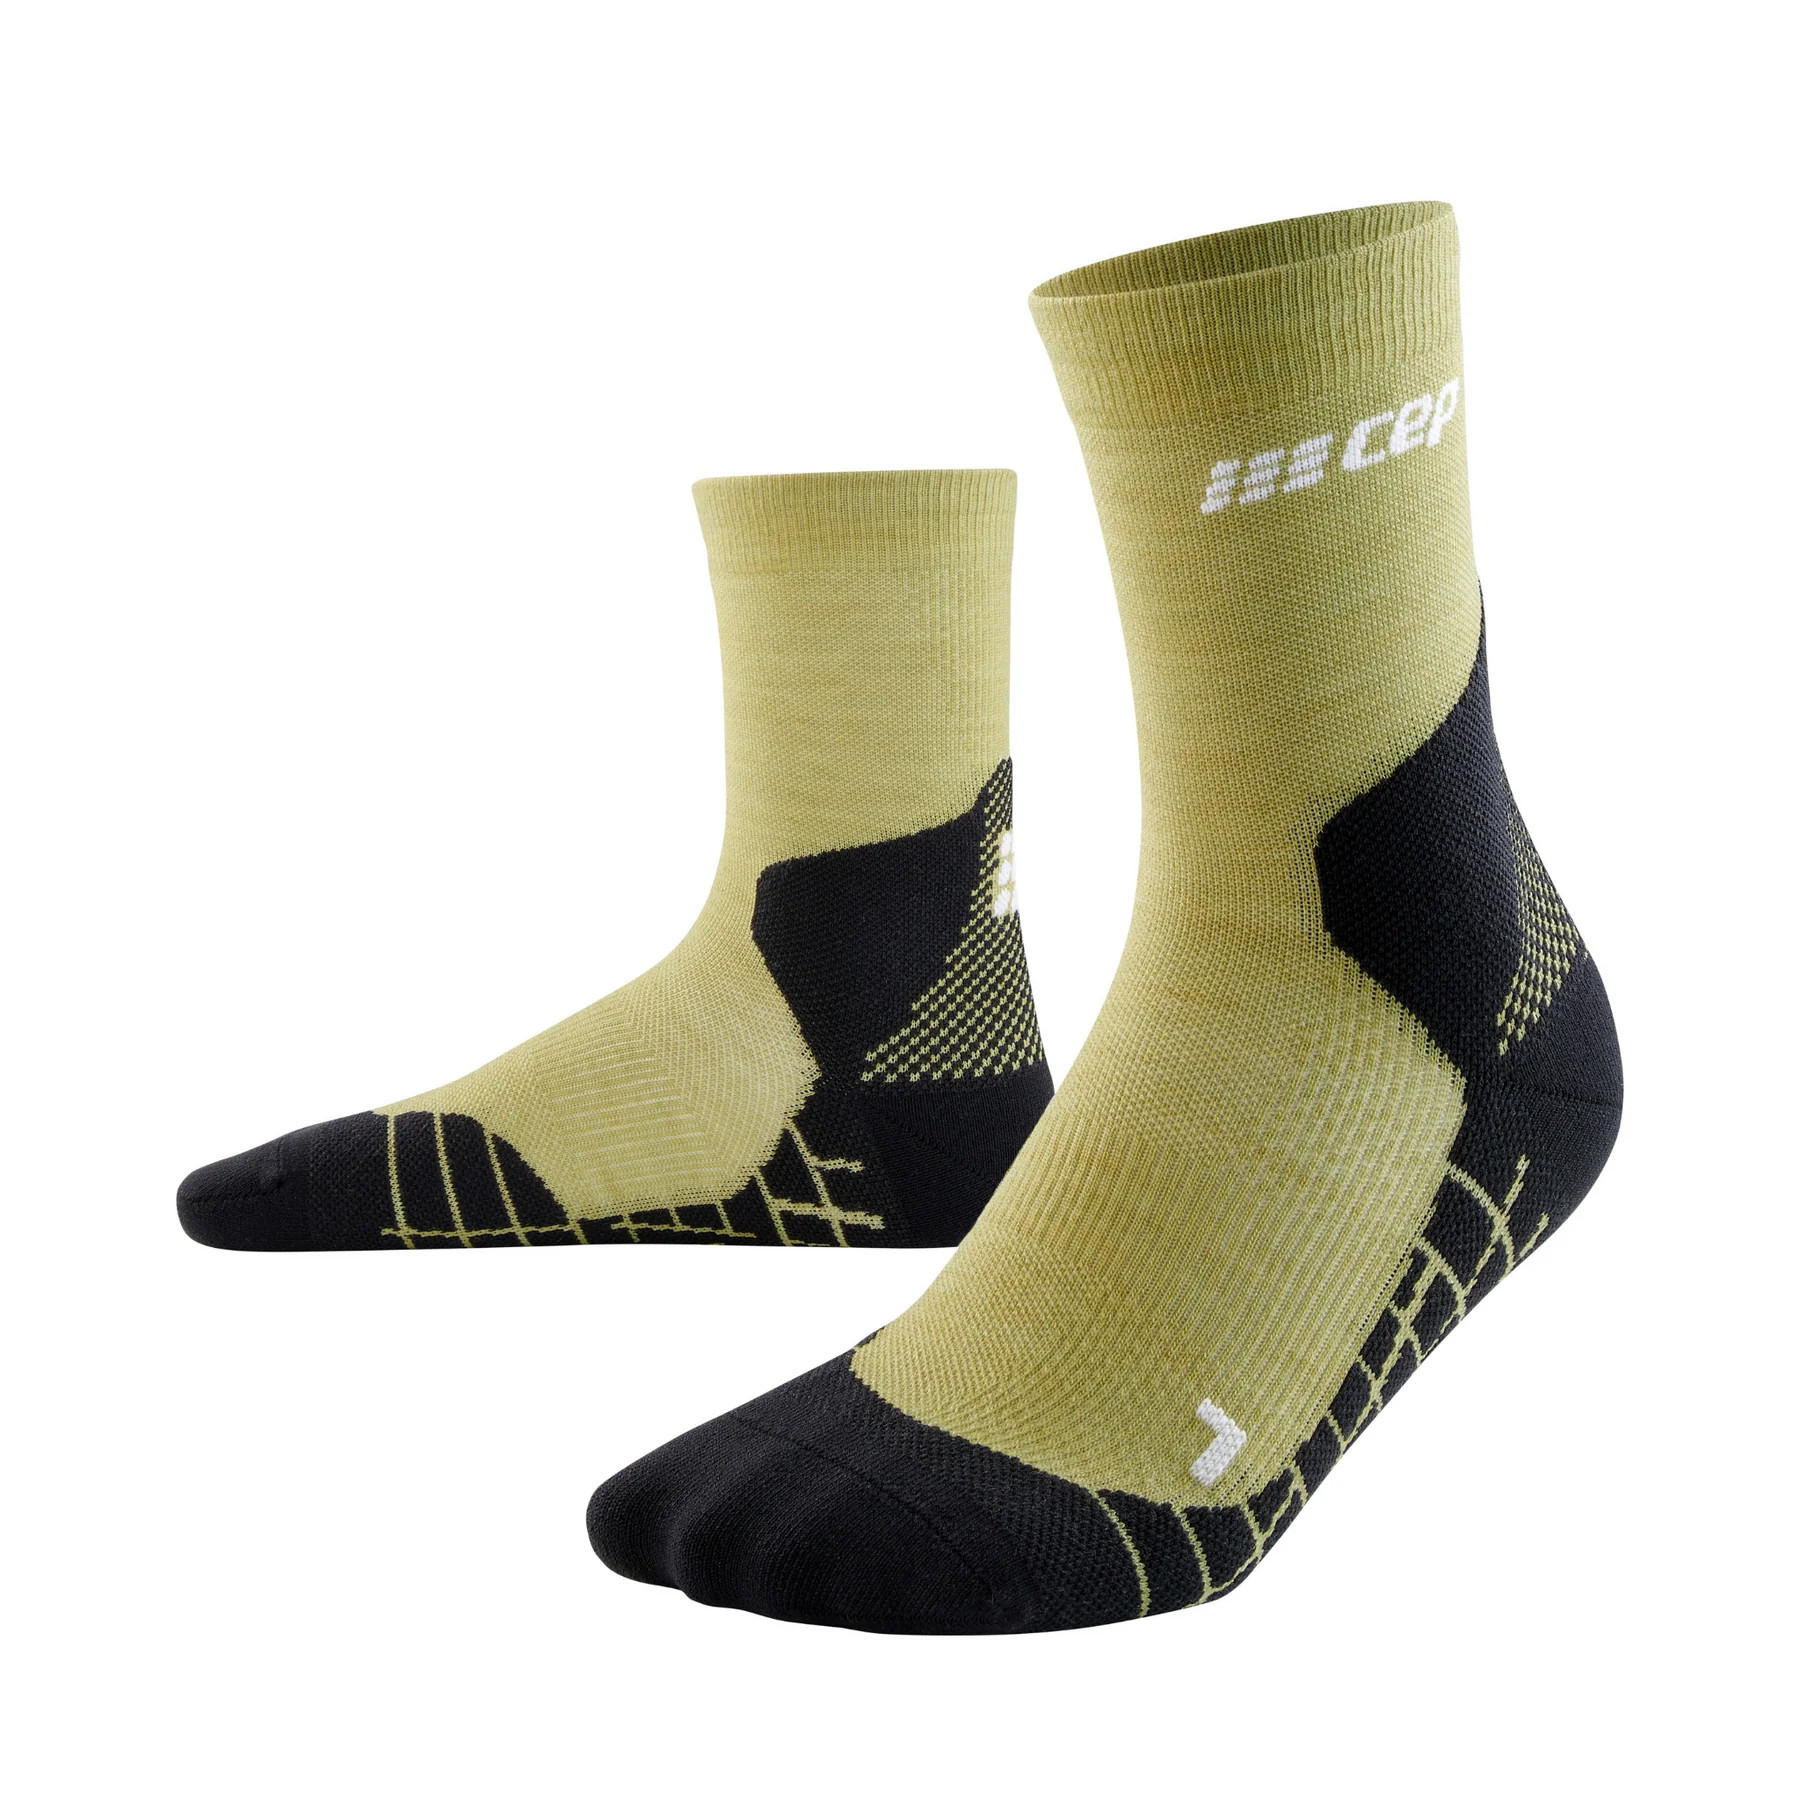 CEP Men’s Hiking Light Merino Mid Cut Compression Socks Light Olive